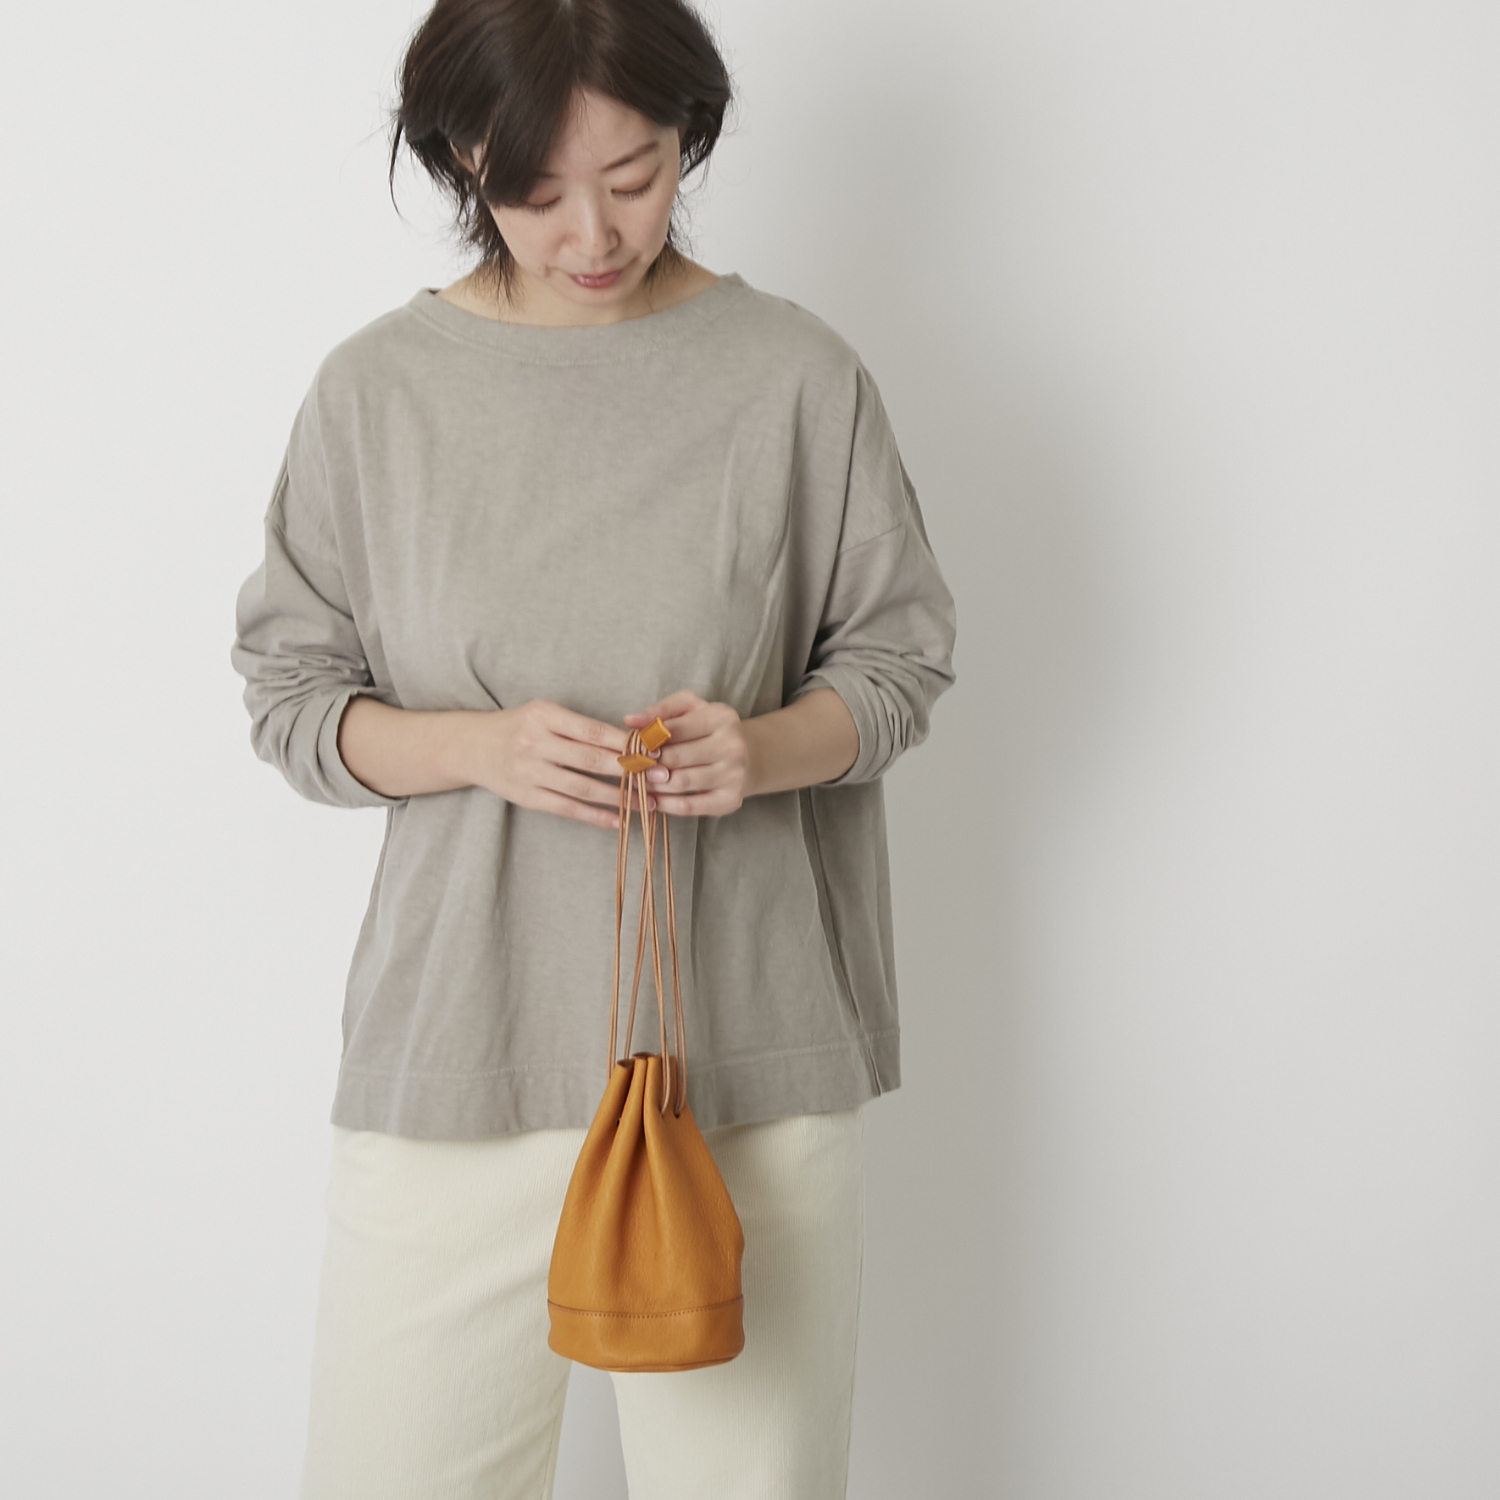 TOKYO LEATHER FACTORY/植物タンニンなめし豚革のランタンバッグ